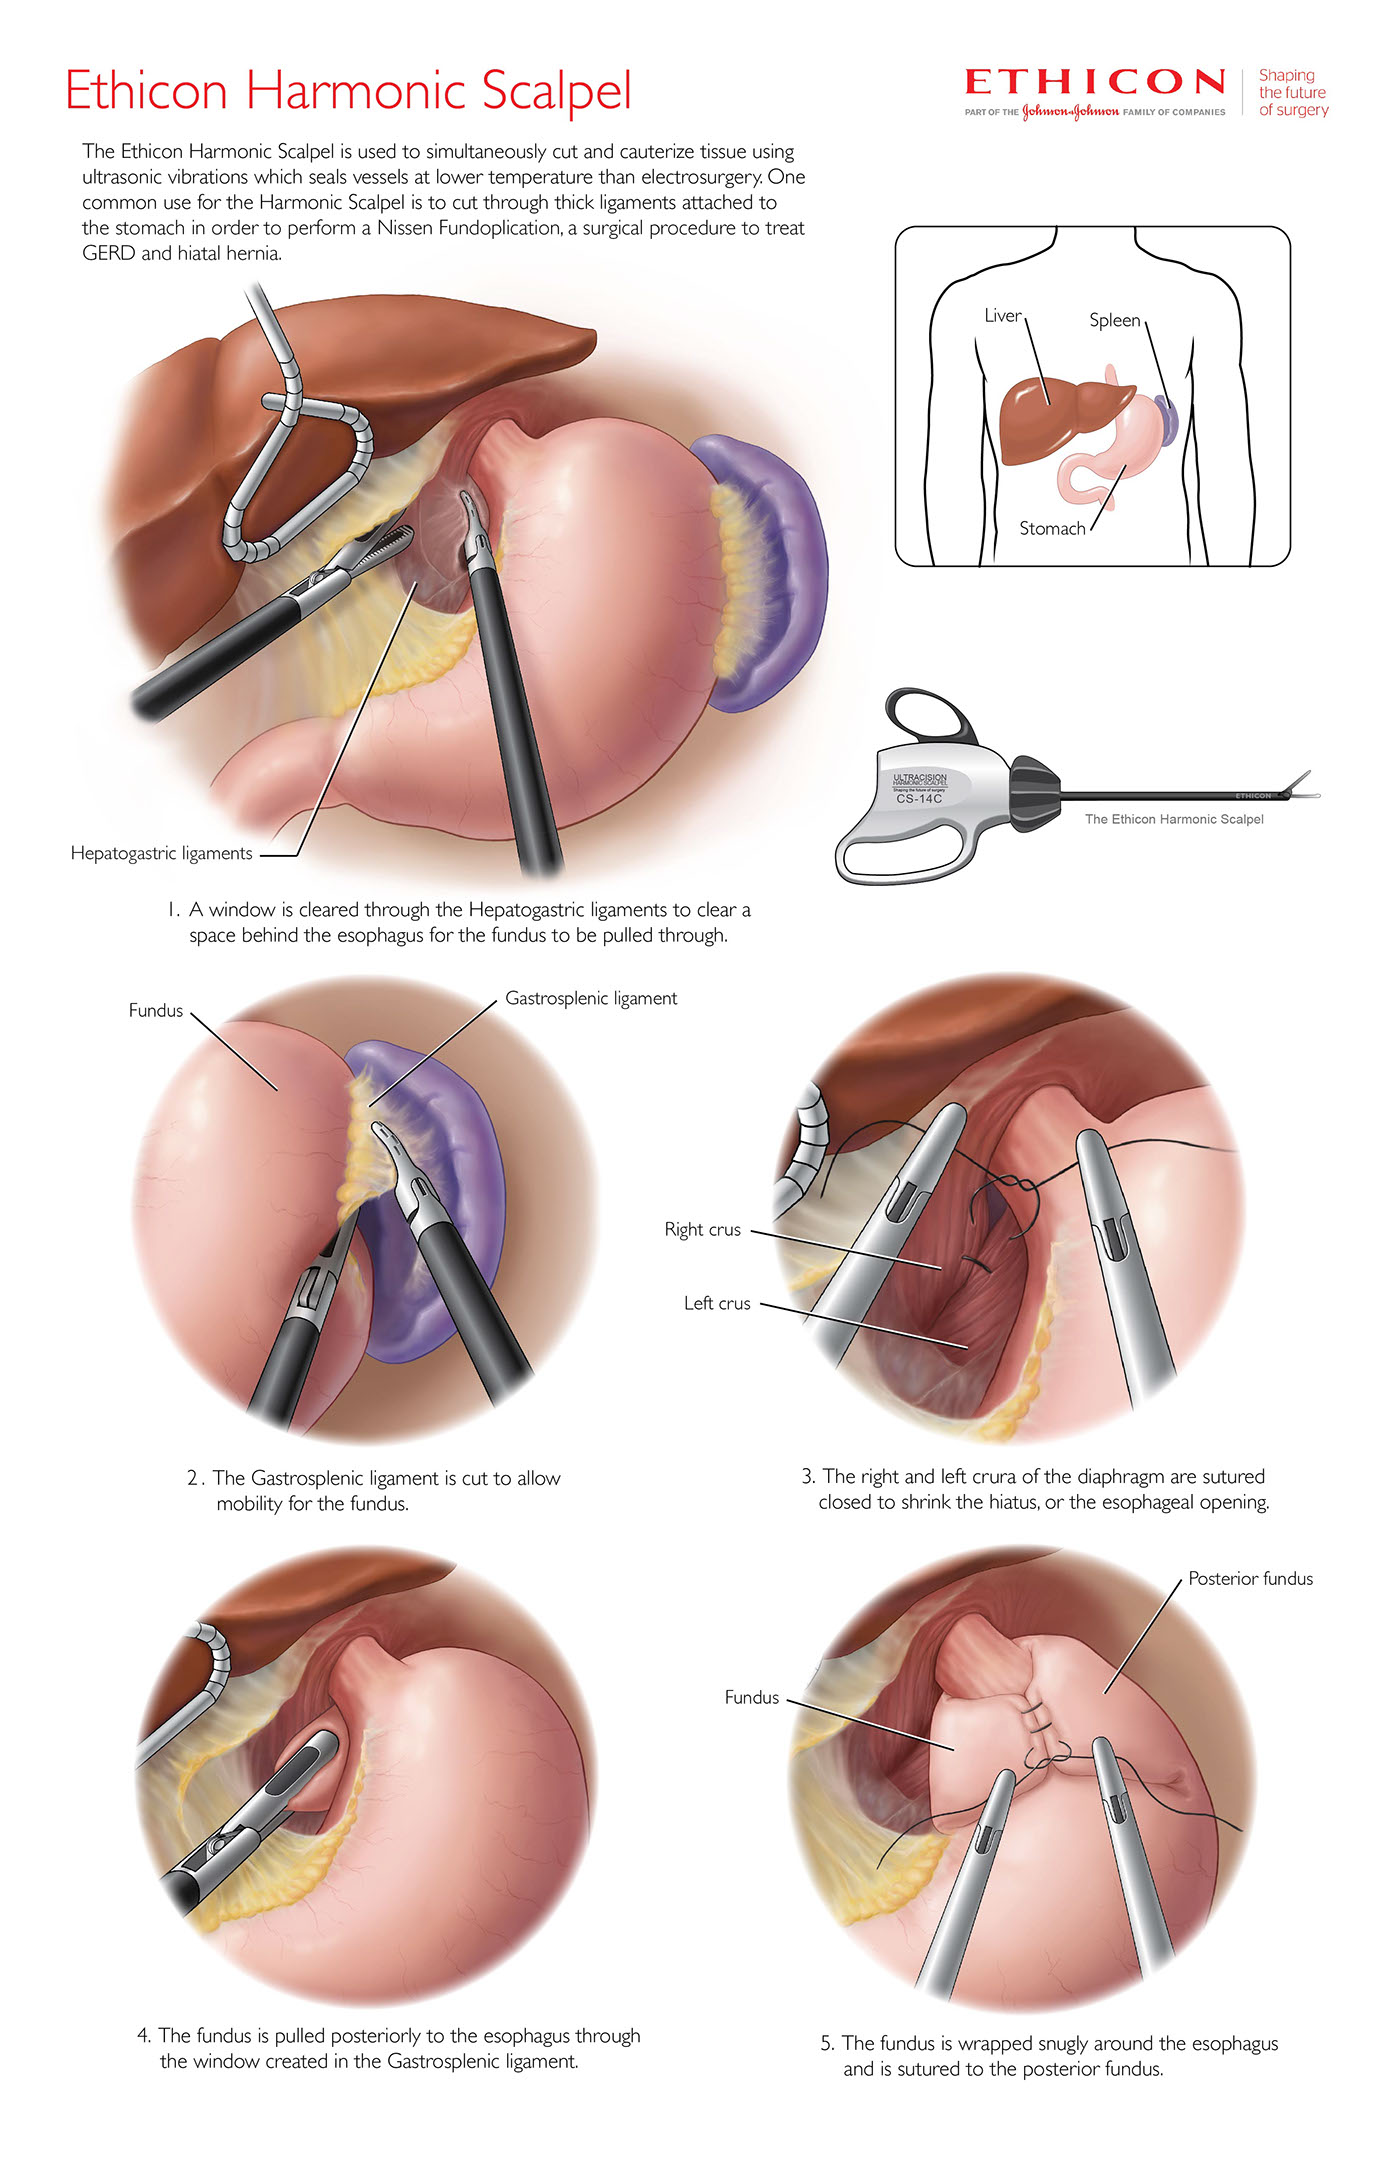 medical illustration biomedical illustration Surgical Illustration nissen fundoplication Promotional surgical poster surgery harmonic scalpel hiatal hernia gerd